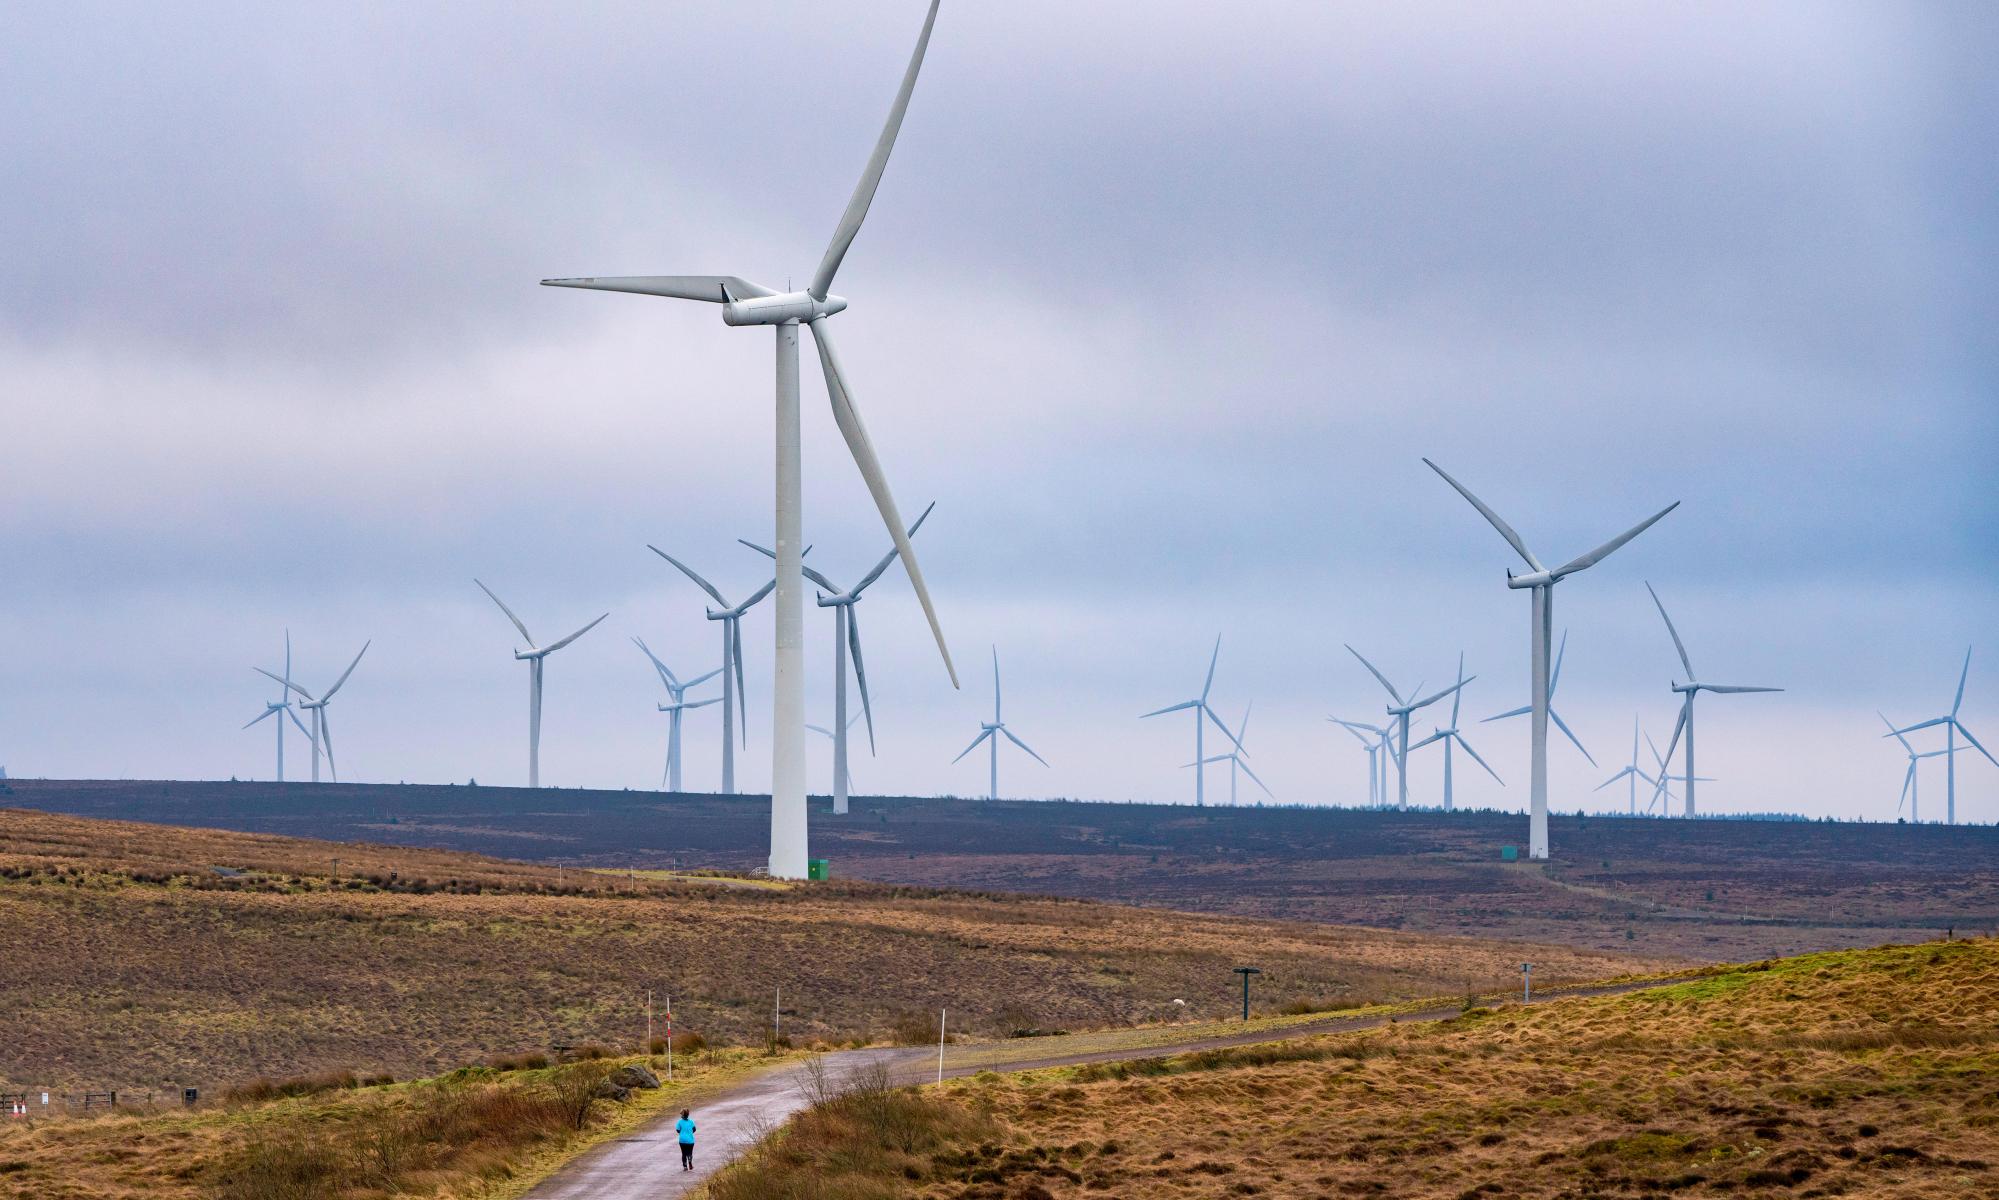 Renewable energy investors increasingly look to UK, says report